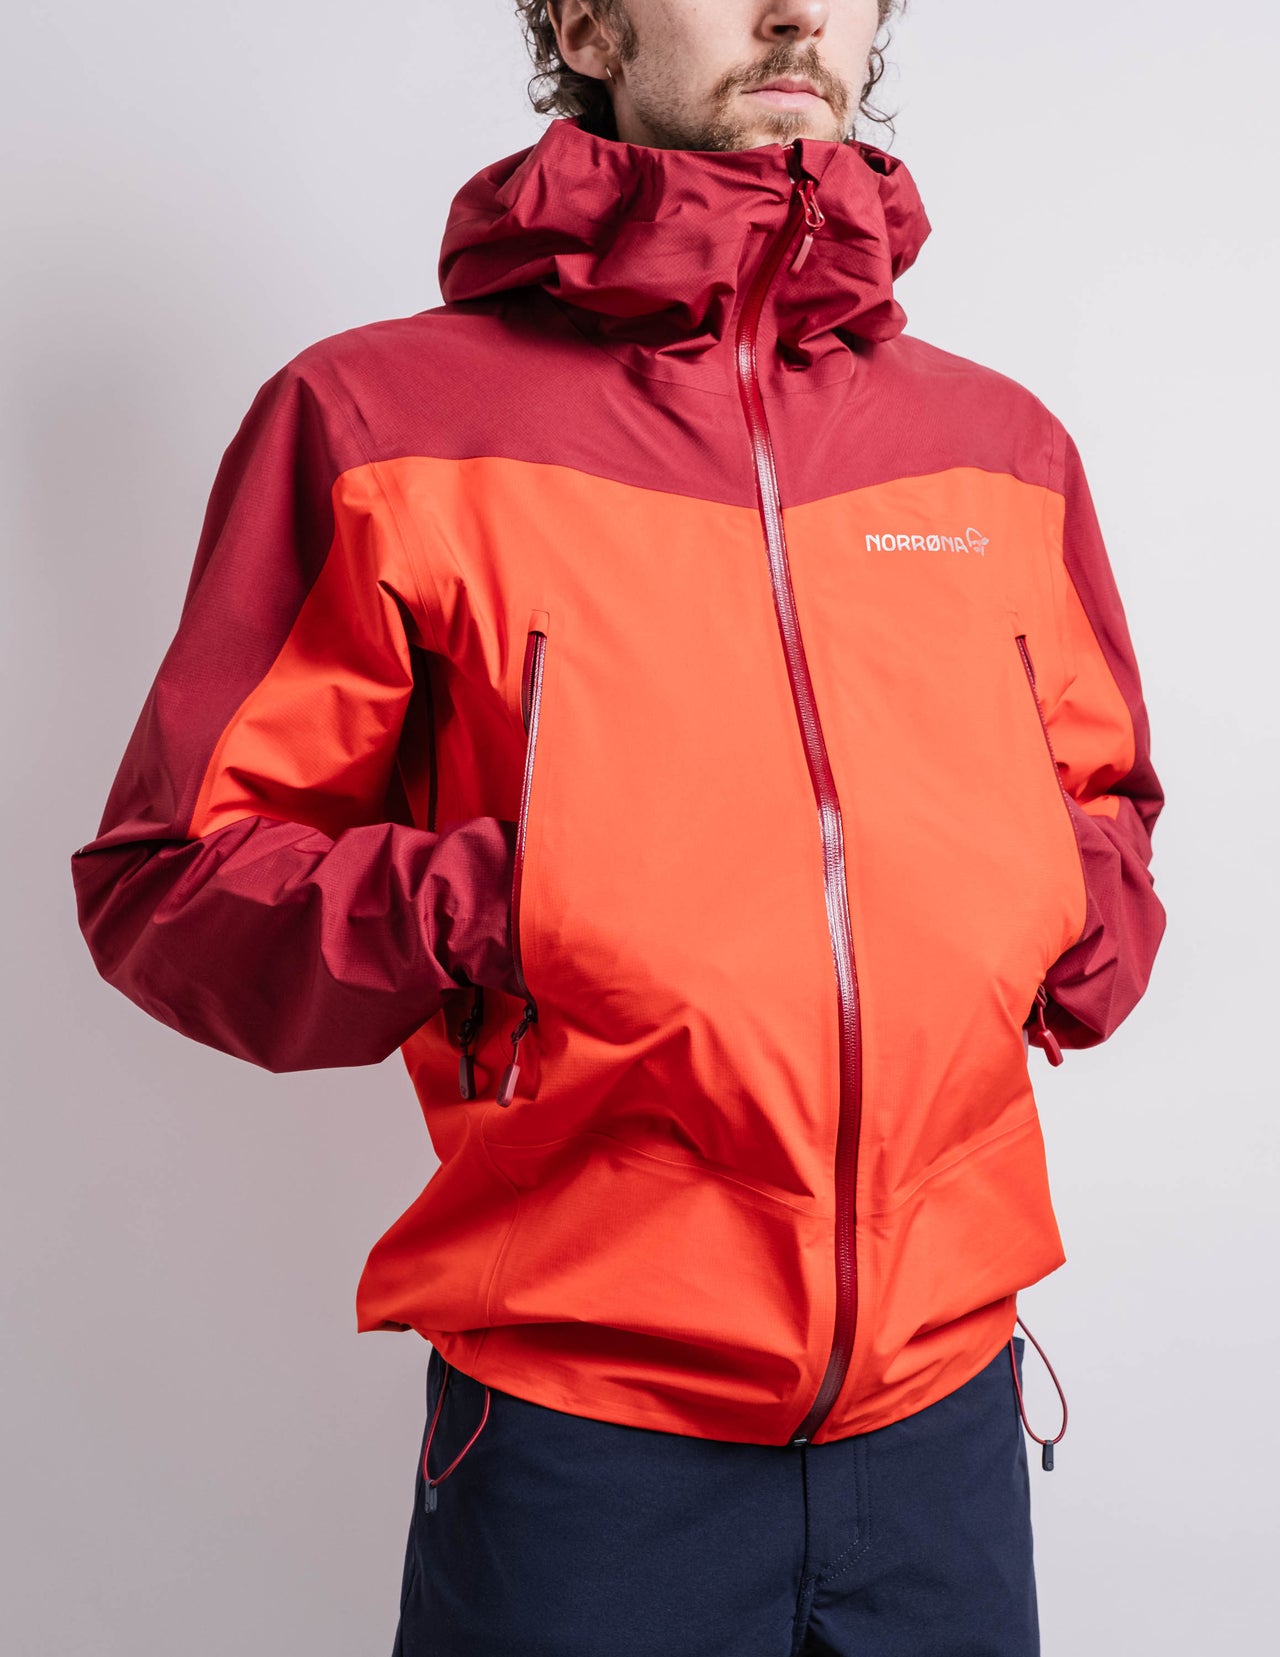 Falketind Gore-Tex Jacket in Arednalin/Rhubarb